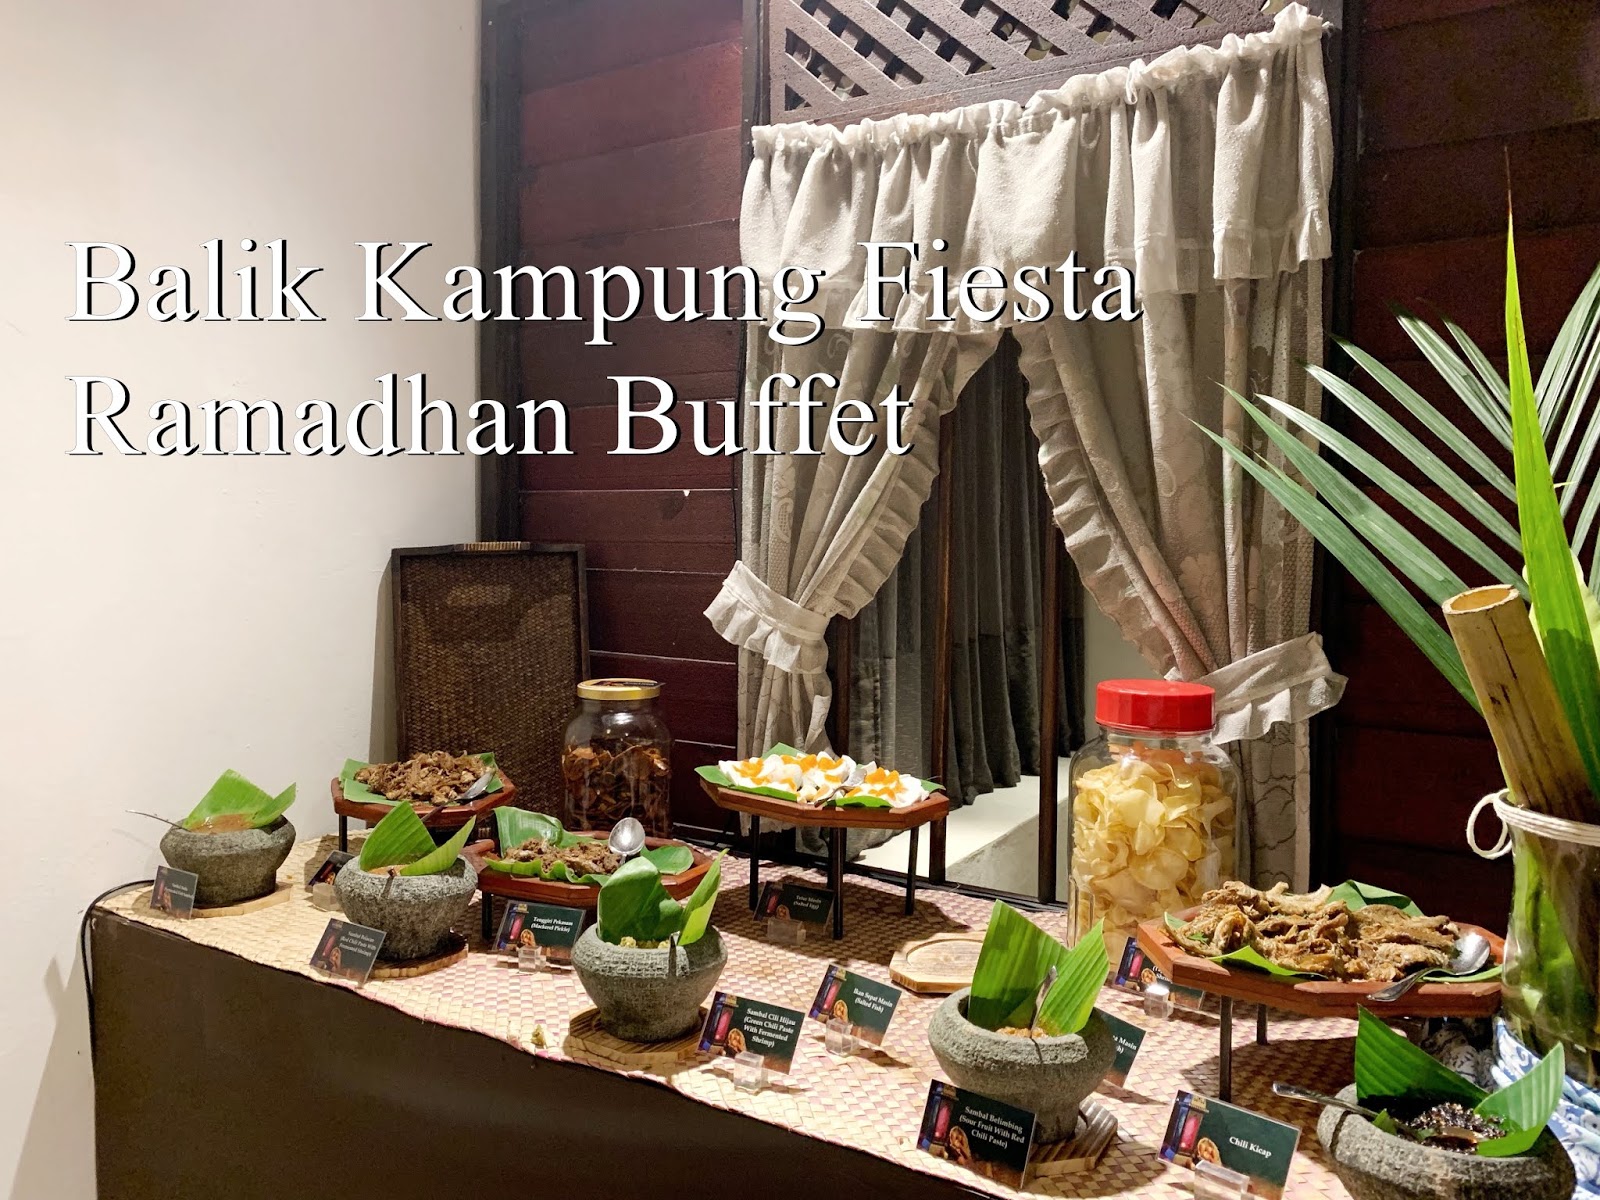 Hotel Equatorial Melaka S Balik Kampung Fiesta Ramadhan Buffet 2019 Hertravelogue Com